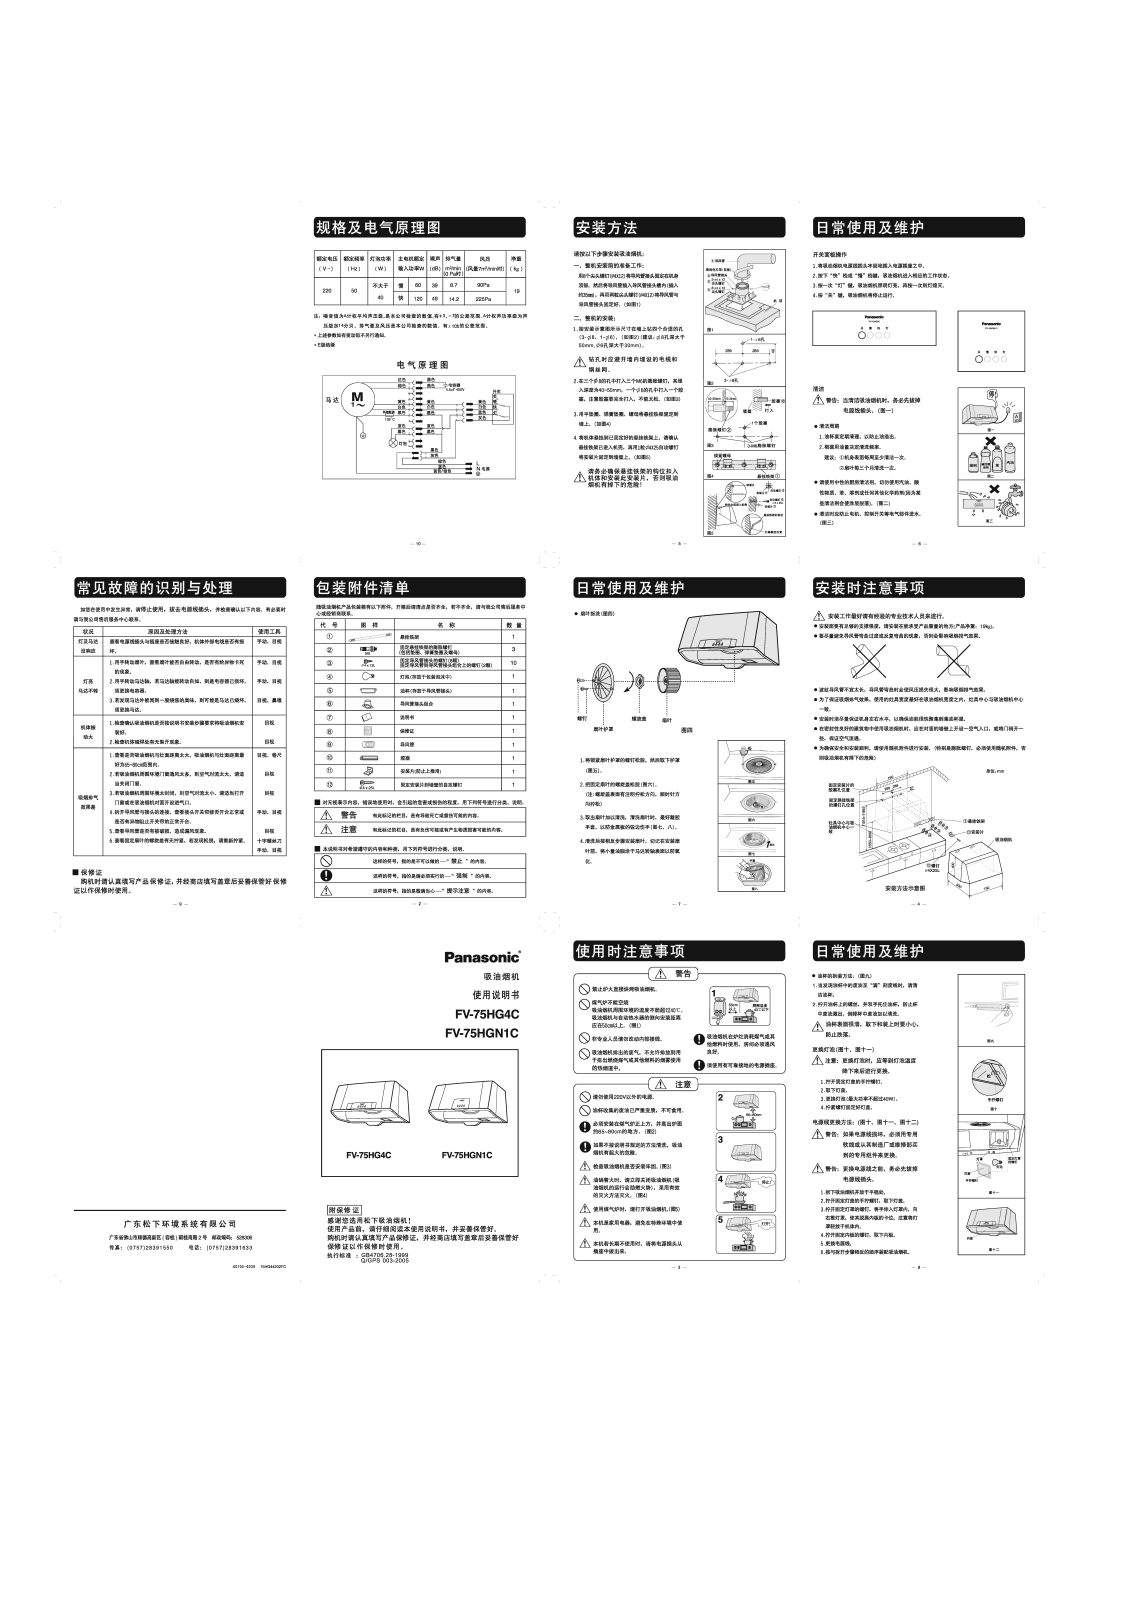 Panasonic FV-75HG4C, FV-75HGN1C User Manual